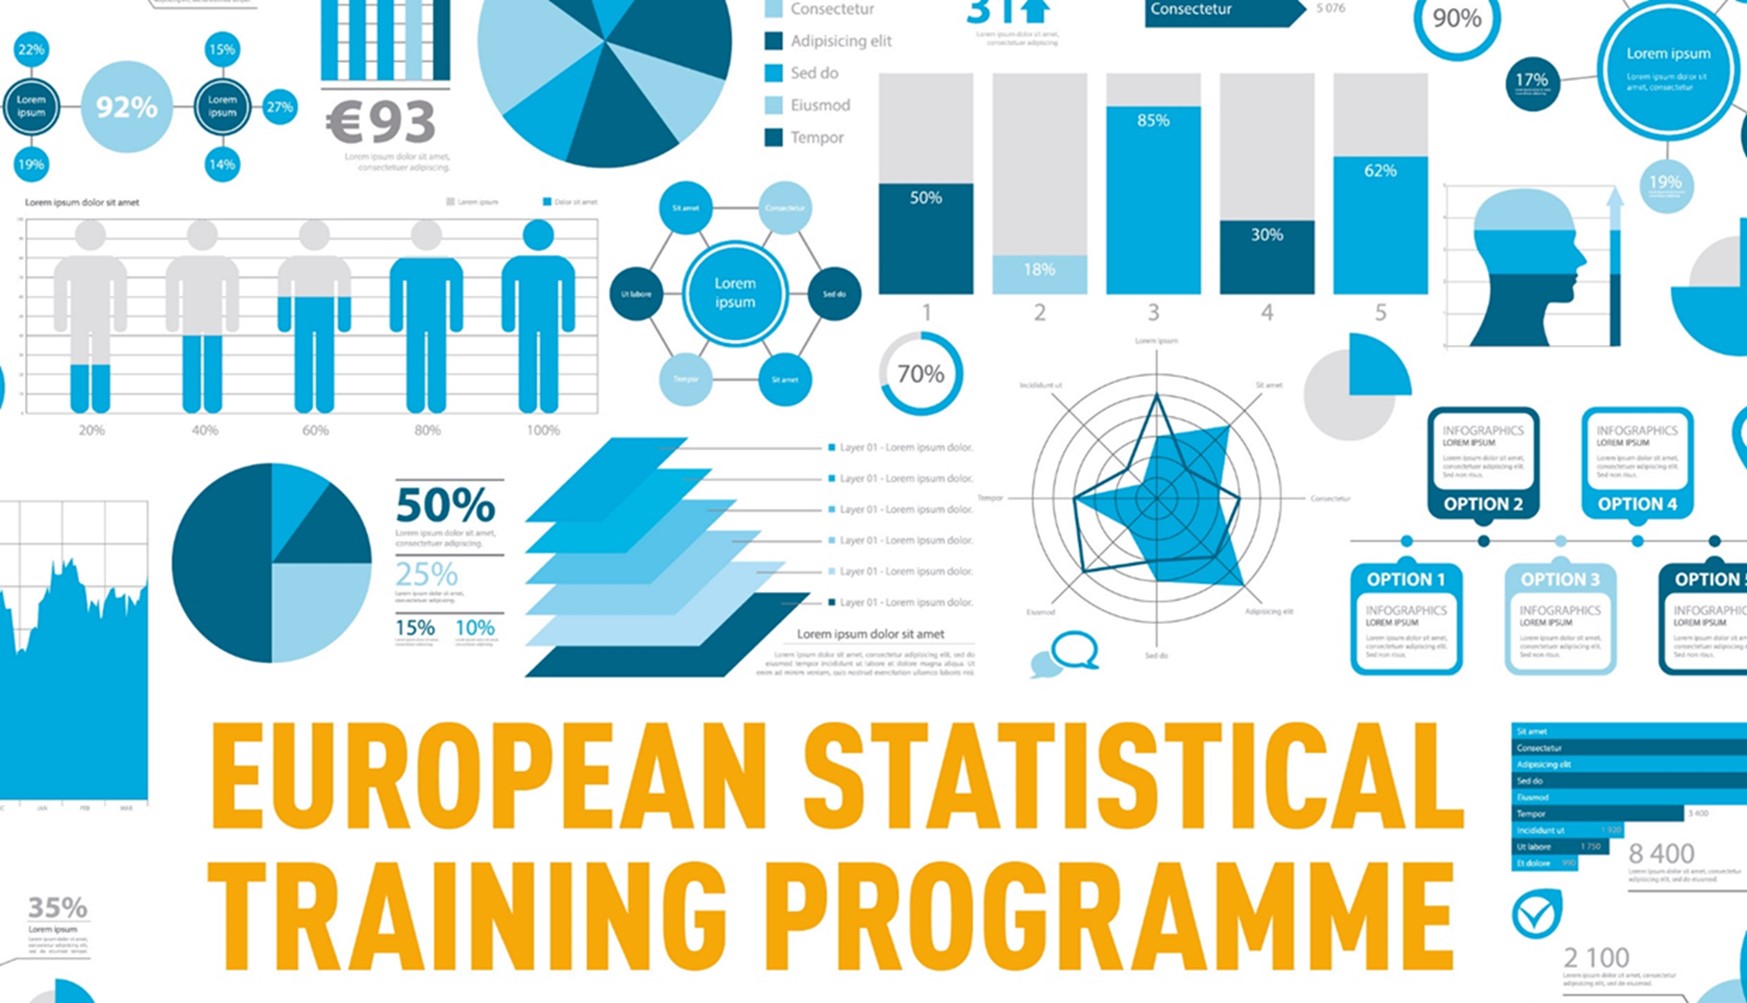 ICON-INSTITUT and European Statistical Training Programme (ESTP)